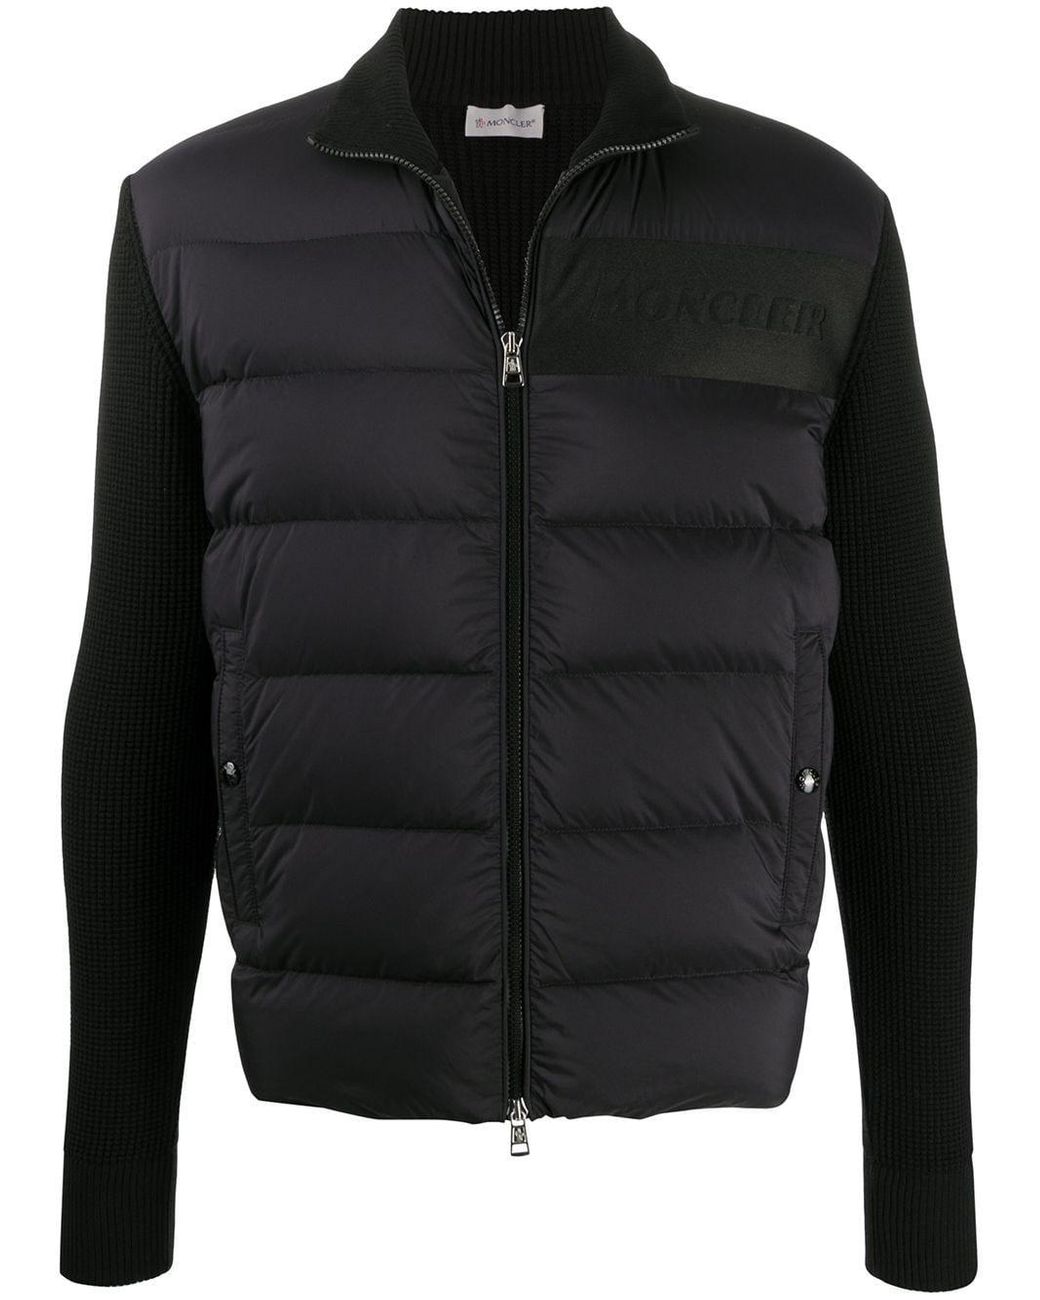 Moncler Wool Padded Jacket in Black for Men - Lyst